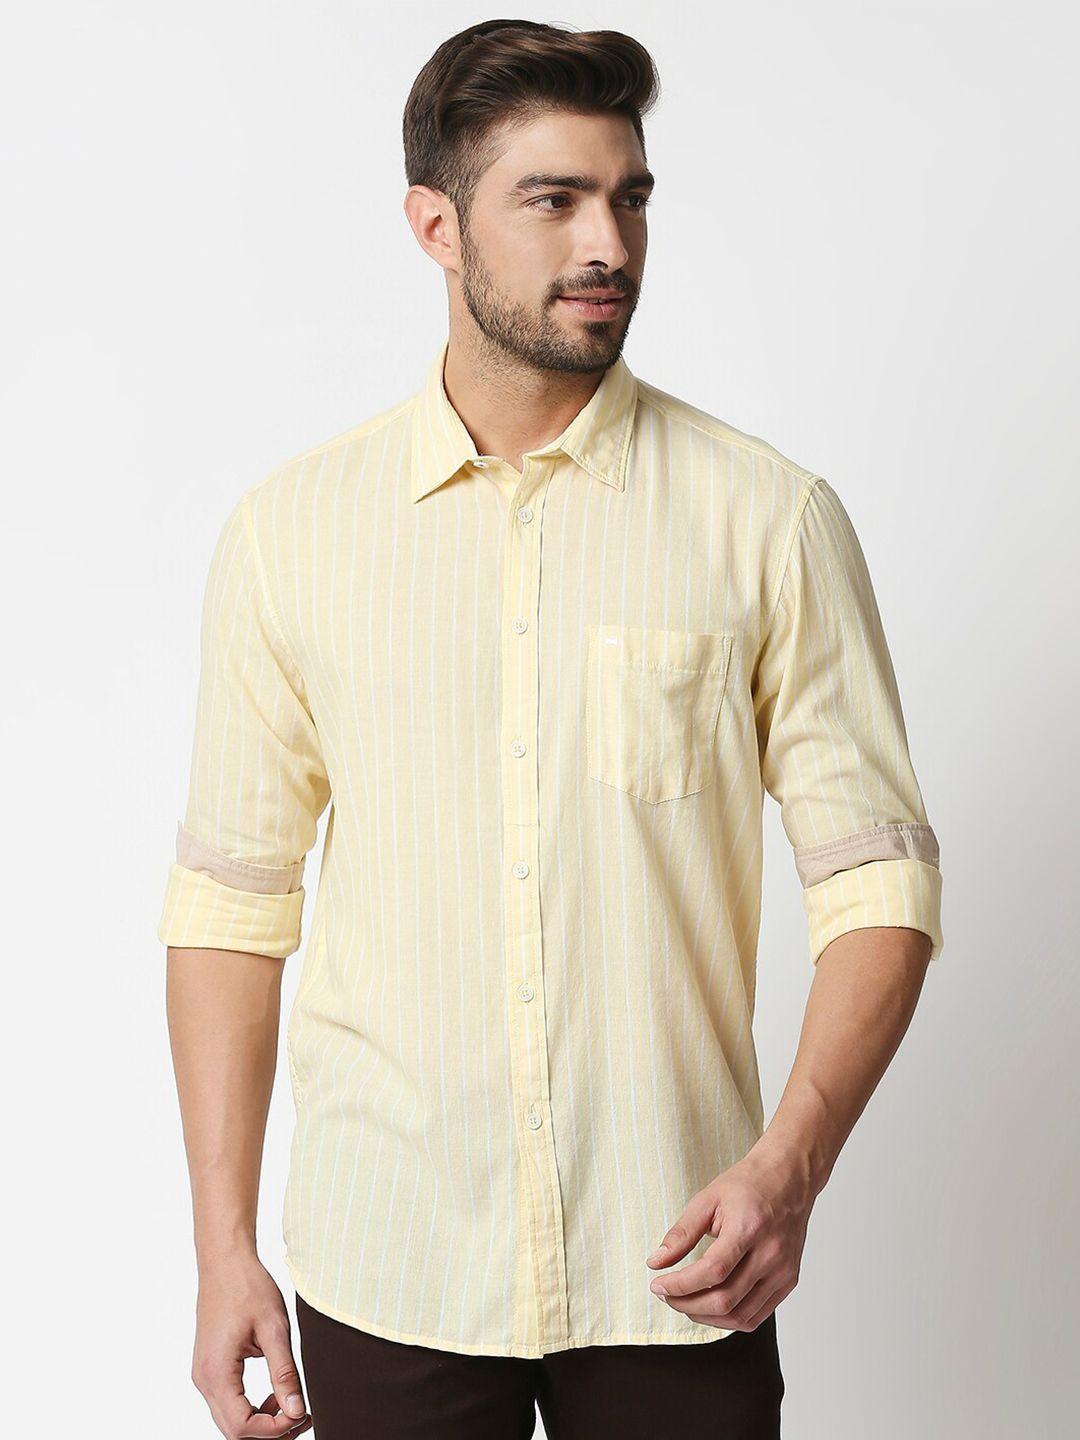 basics-men-white-&-yellow-slim-fit-striped-cotton-linen-casual-shirt